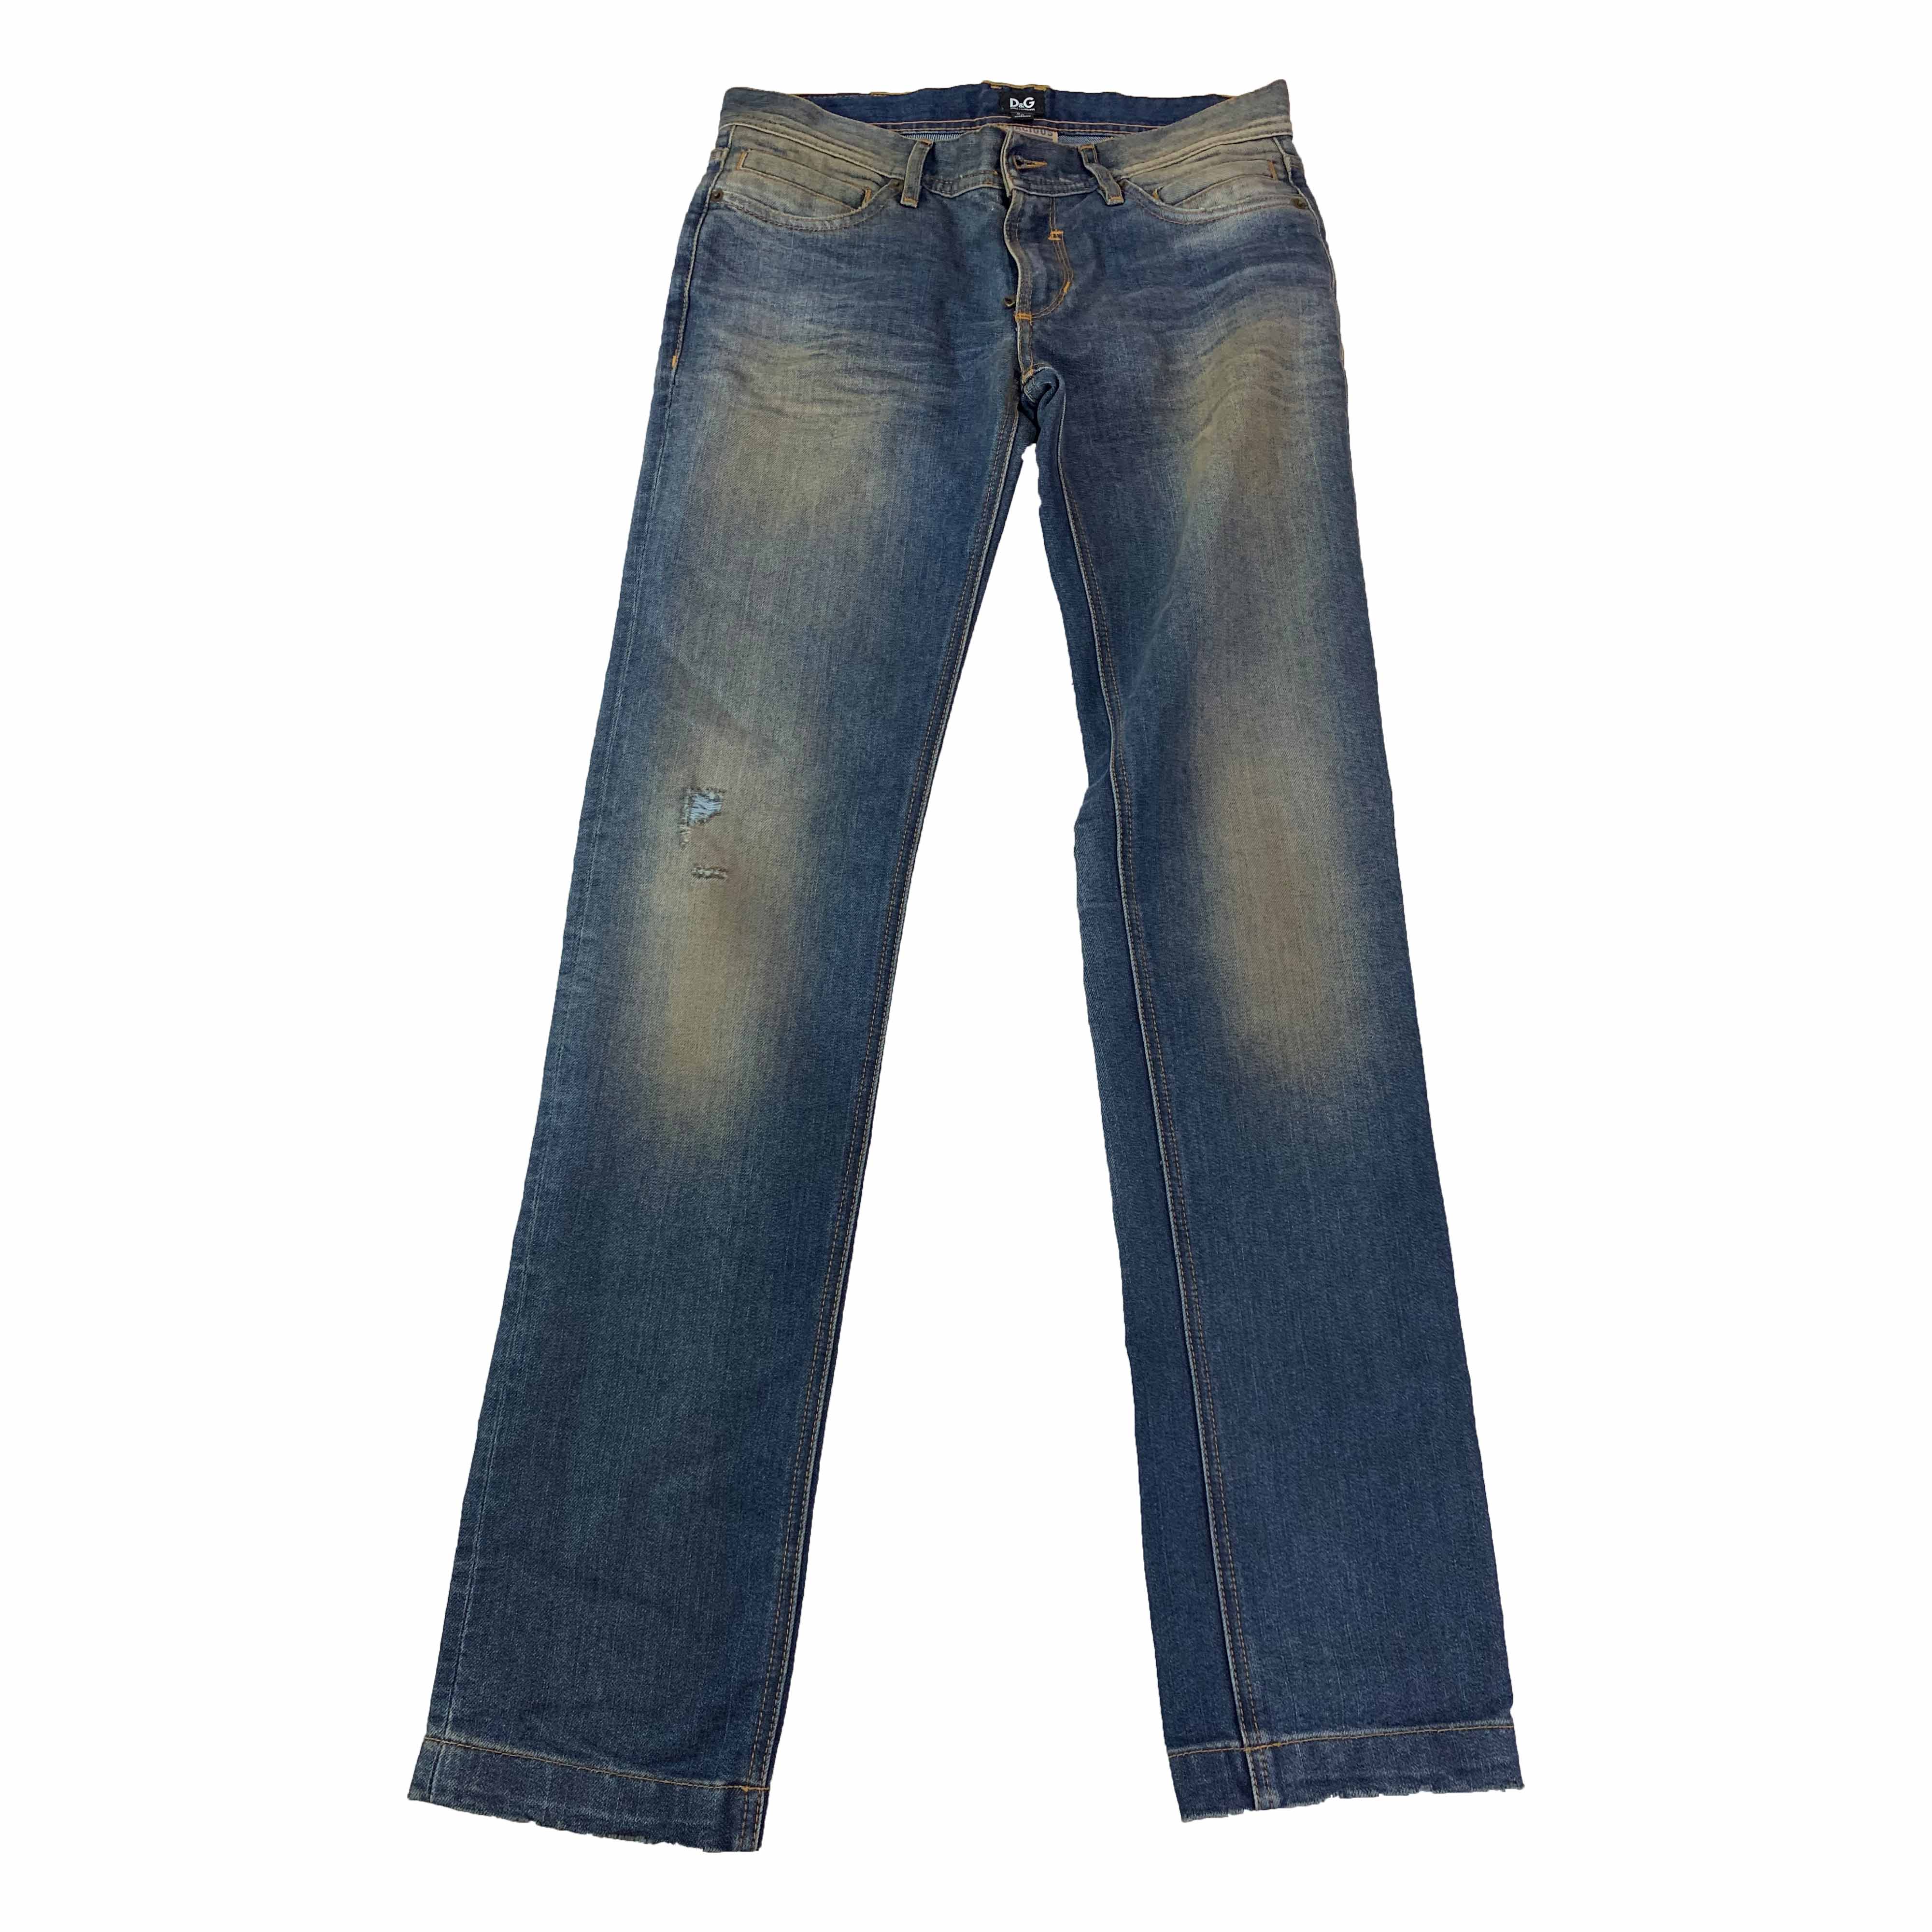 [D&amp;G] Wahsed Dark Denim Jeans - Size 31